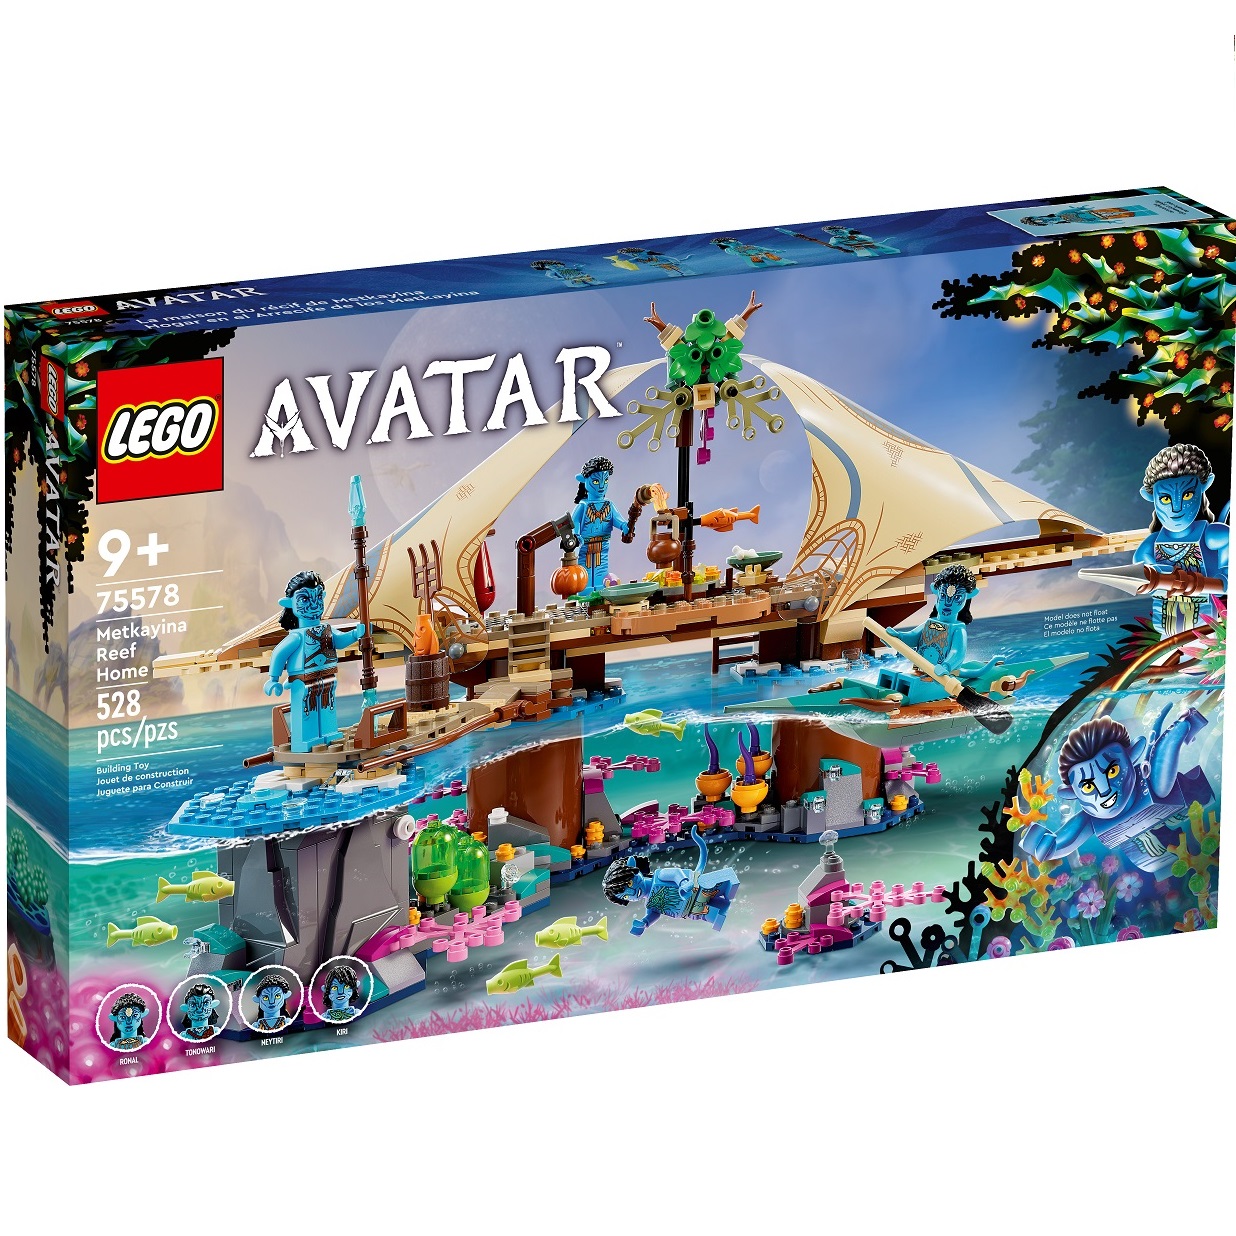 Конструктор LEGO Avatar Metkayina Reef Home, 528 деталей (75578) - фото 1